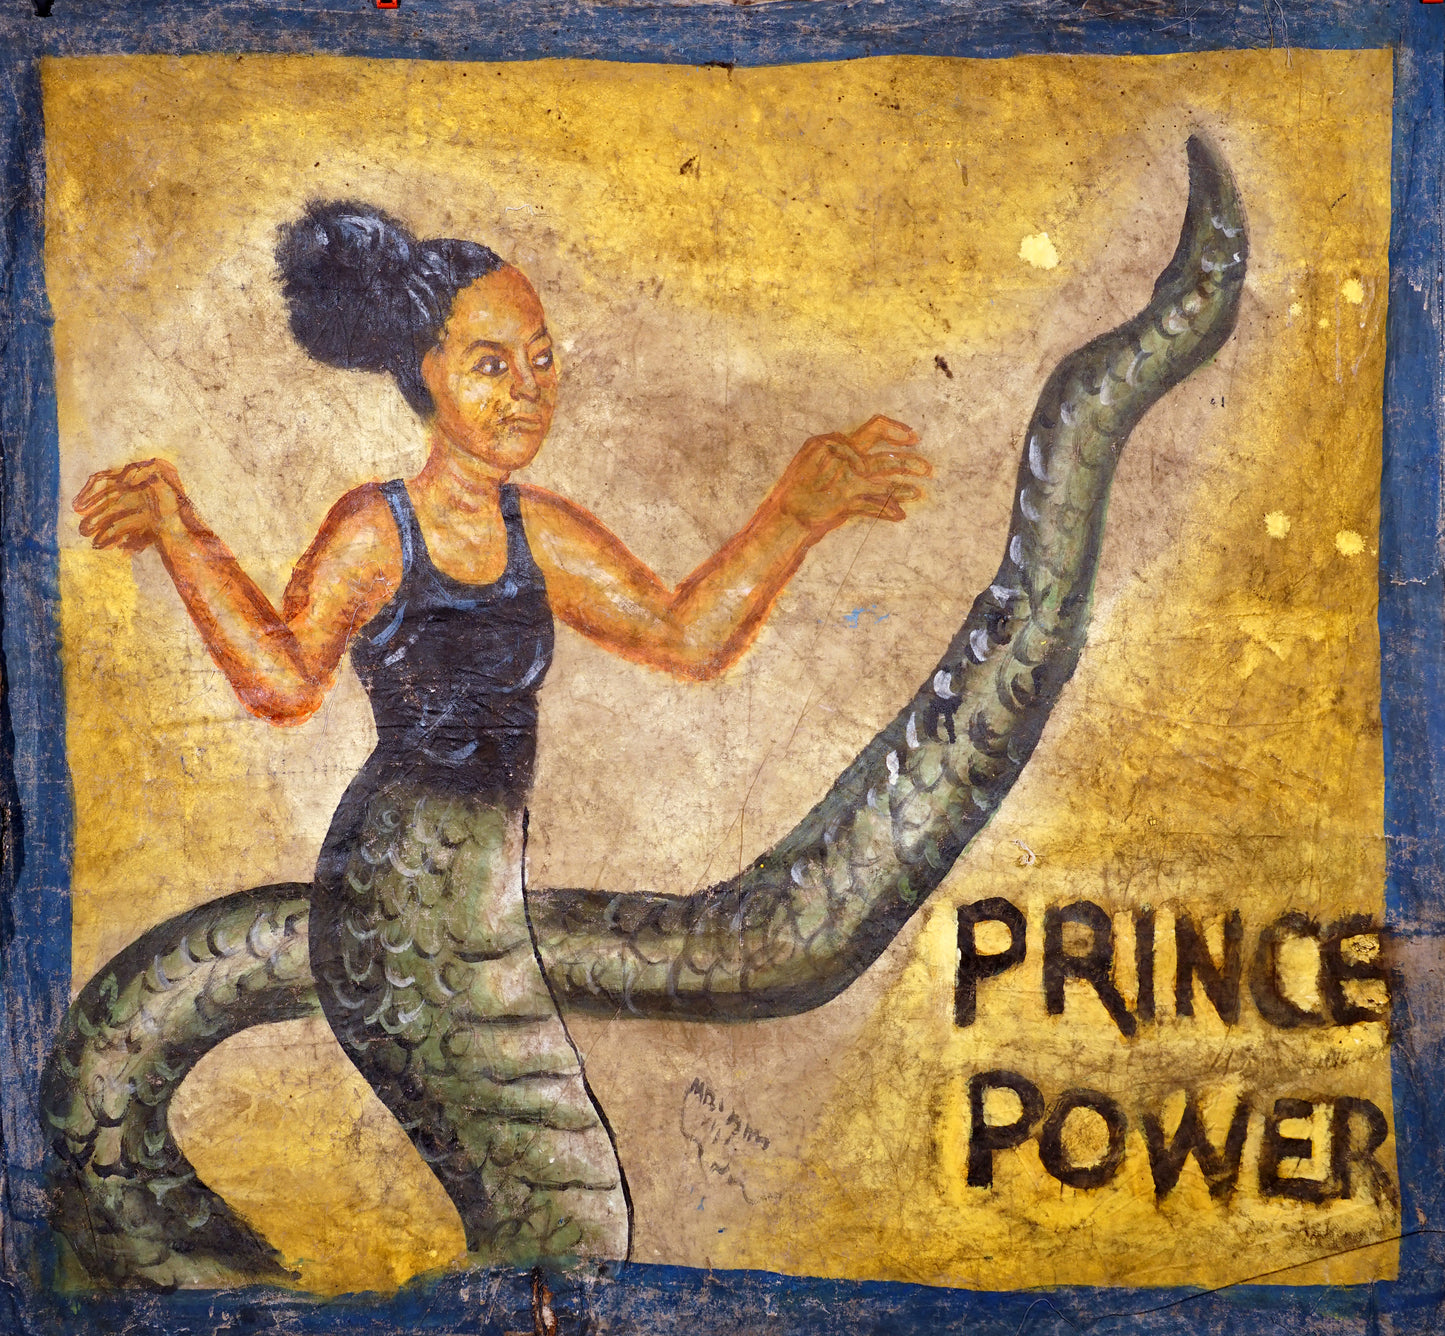 "Prince Power" by Mr. Brew